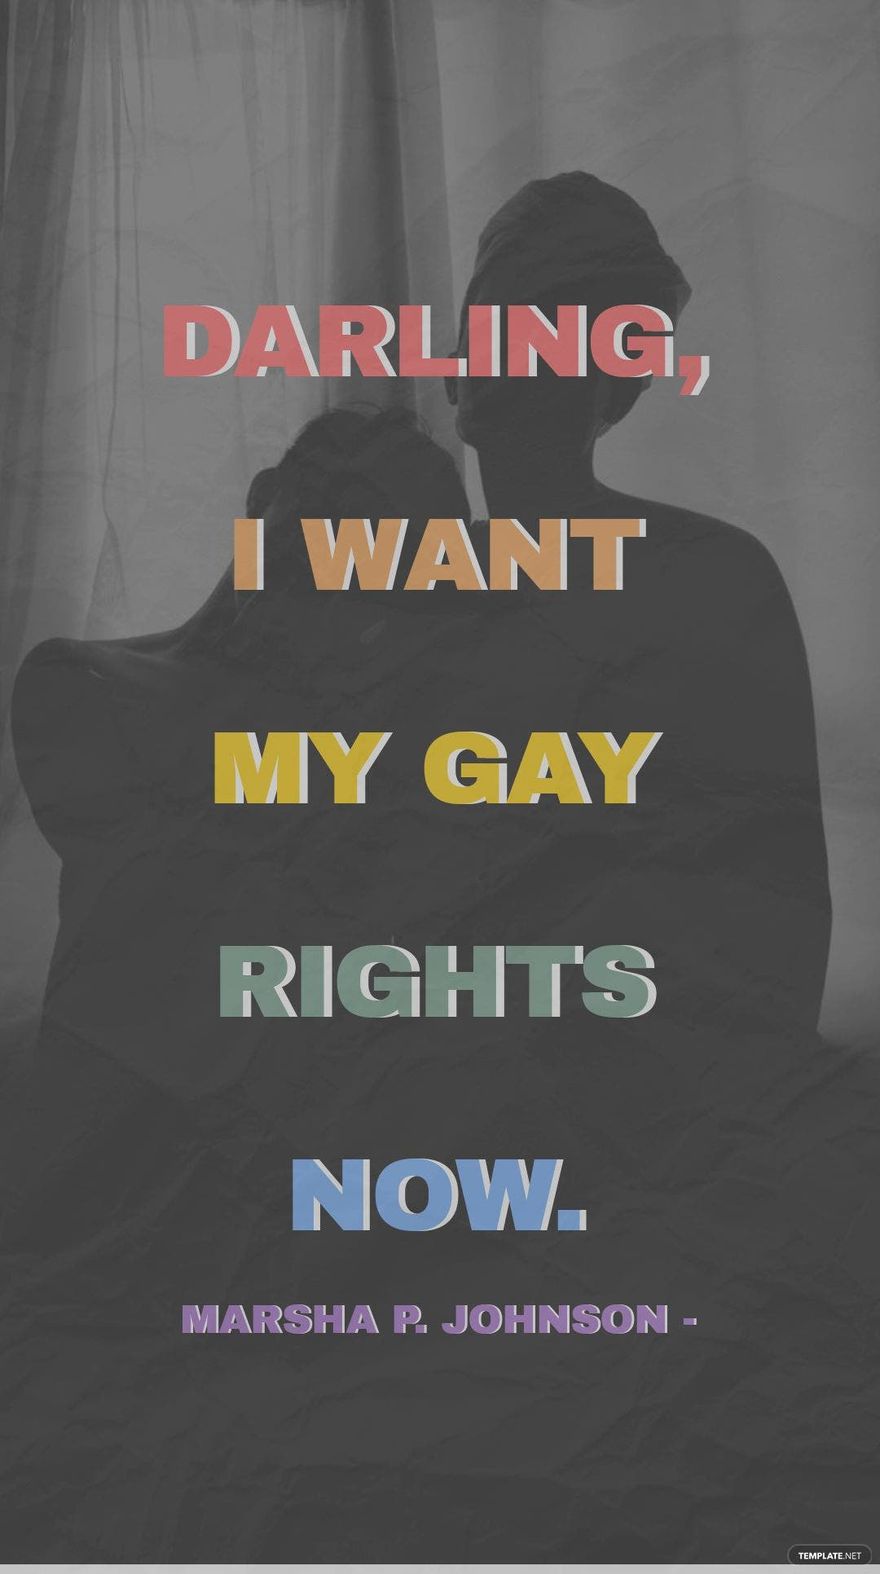 Marsha P. Johnson - Darling, I want my gay rights now. in JPG